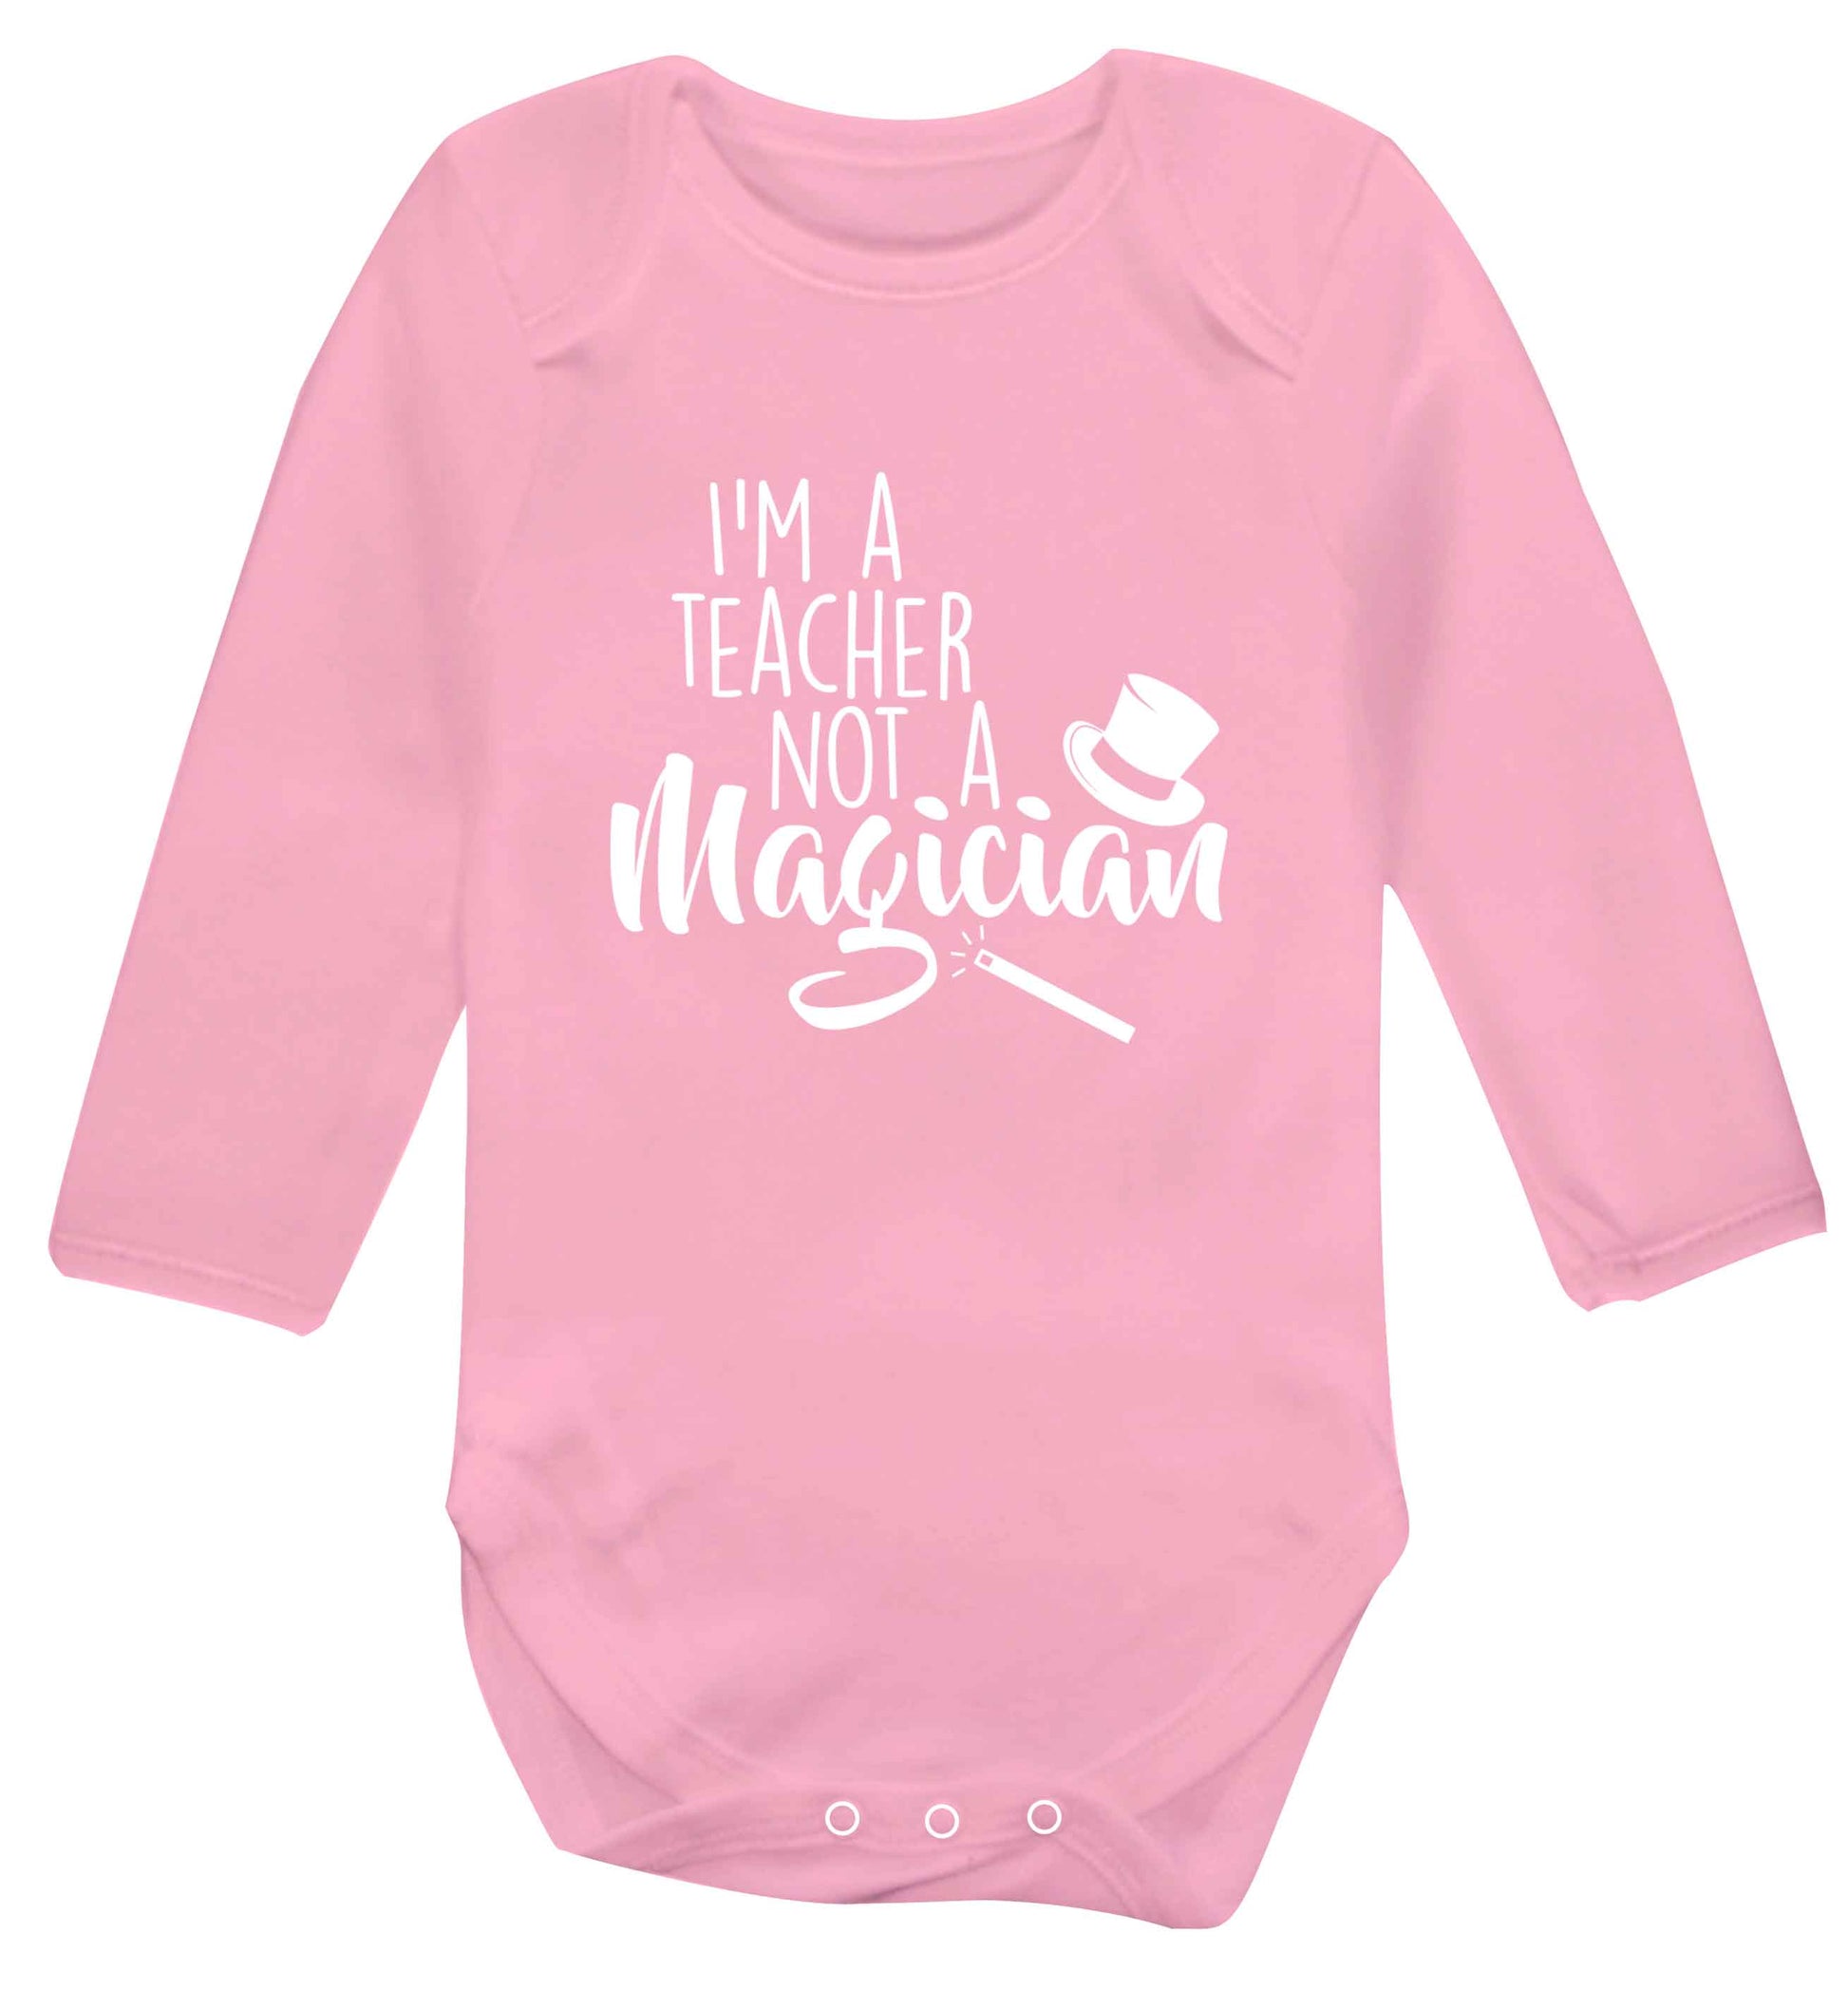 I'm a teacher not a magician baby vest long sleeved pale pink 6-12 months